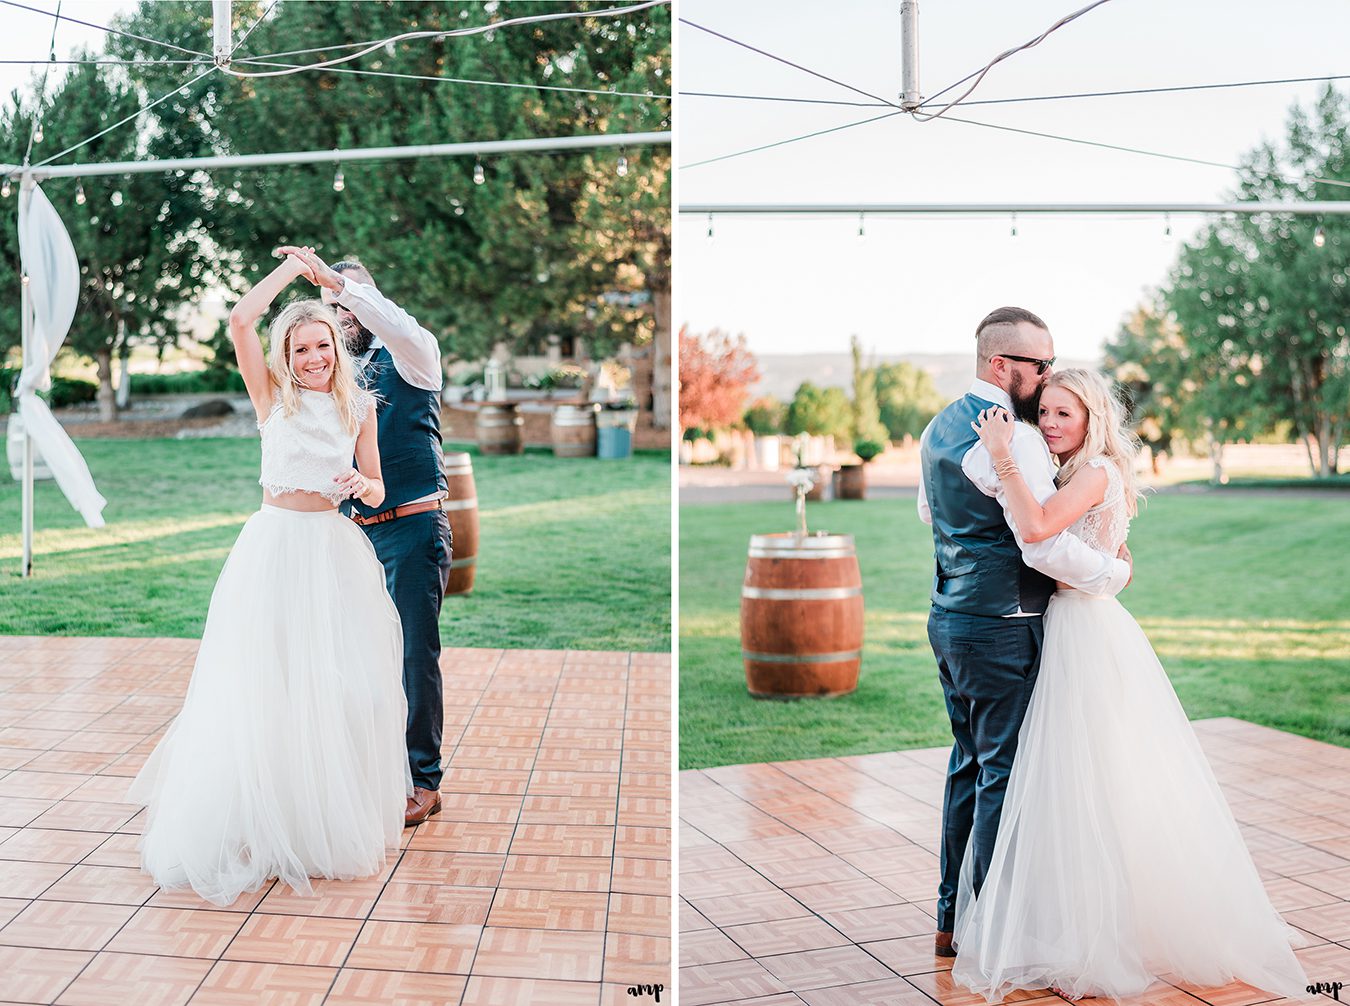 Beth and Dustin's first dance | Grand Junction Backyard Wedding | amanda.matilda.photography